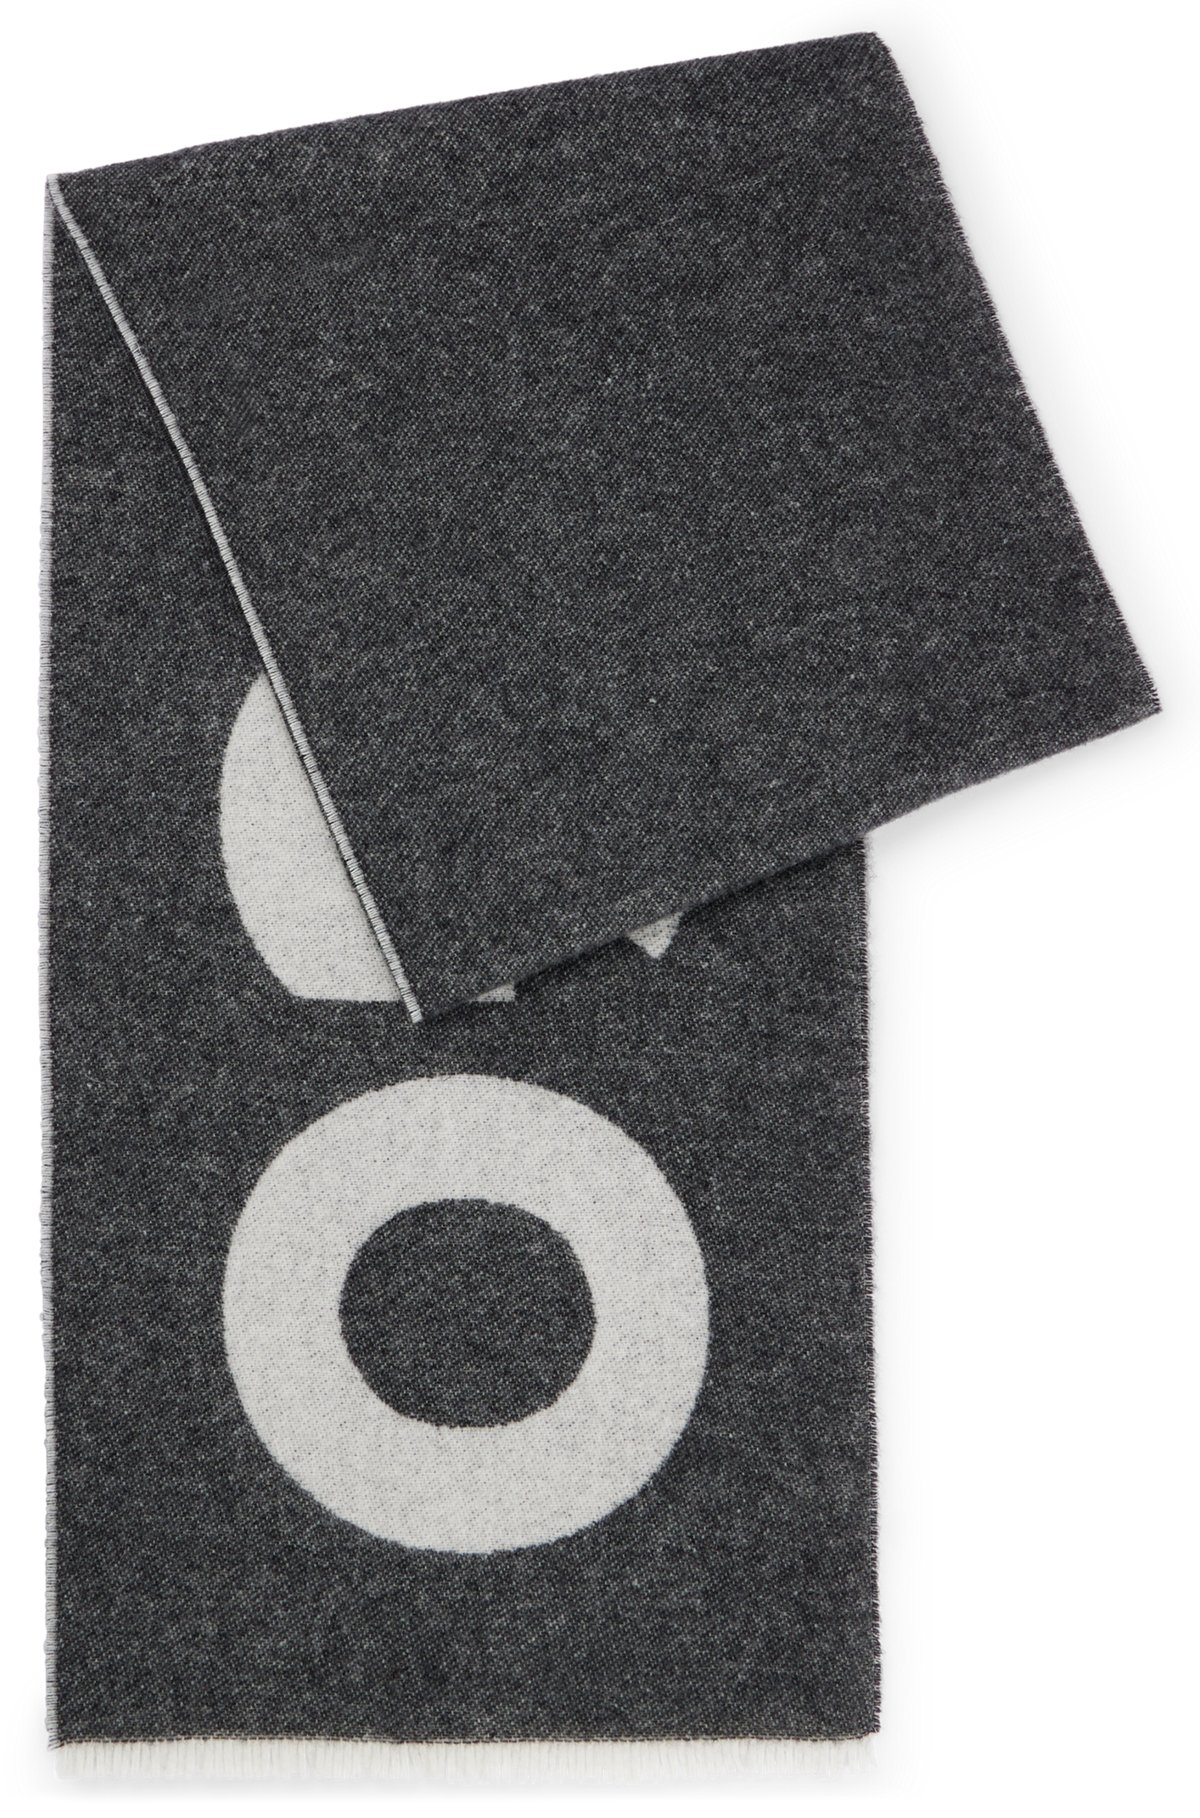 Contrast logo scarf in a wool blend, Black